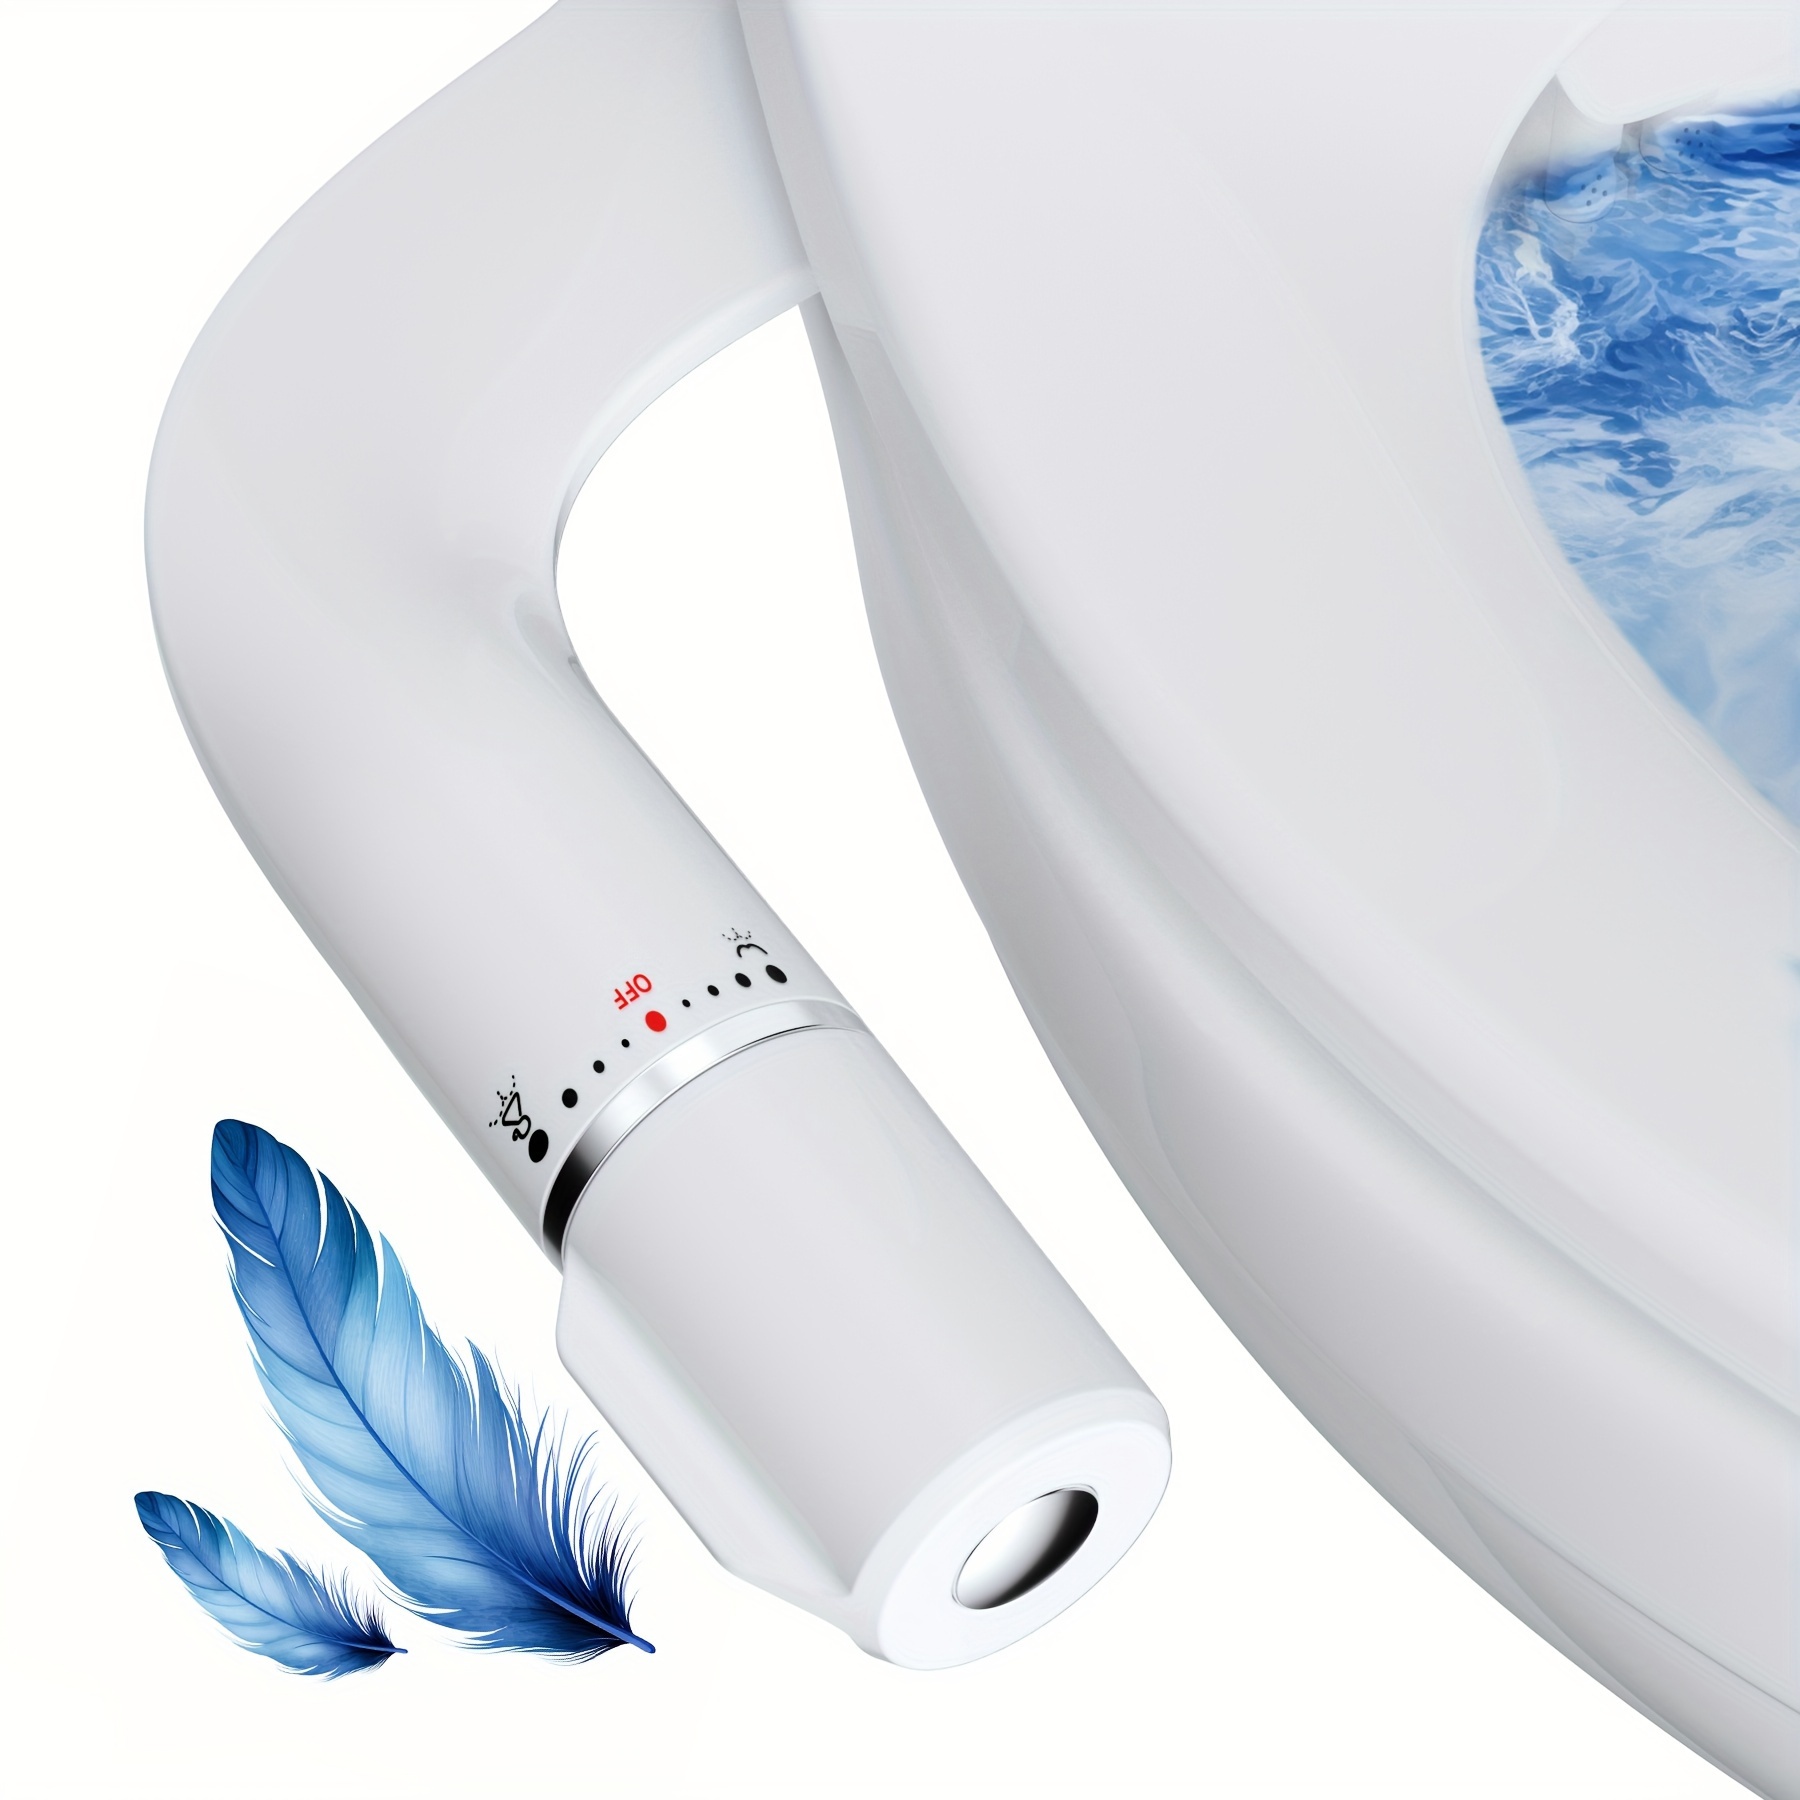 SAMODRA Ultra-Slim Bidet Attachment, Non-Electric Dual Nozzle (Frontal &  Rear Wash) Adjustable Water Pressure Fresh Water Bidet Toilet Seat  Attachment